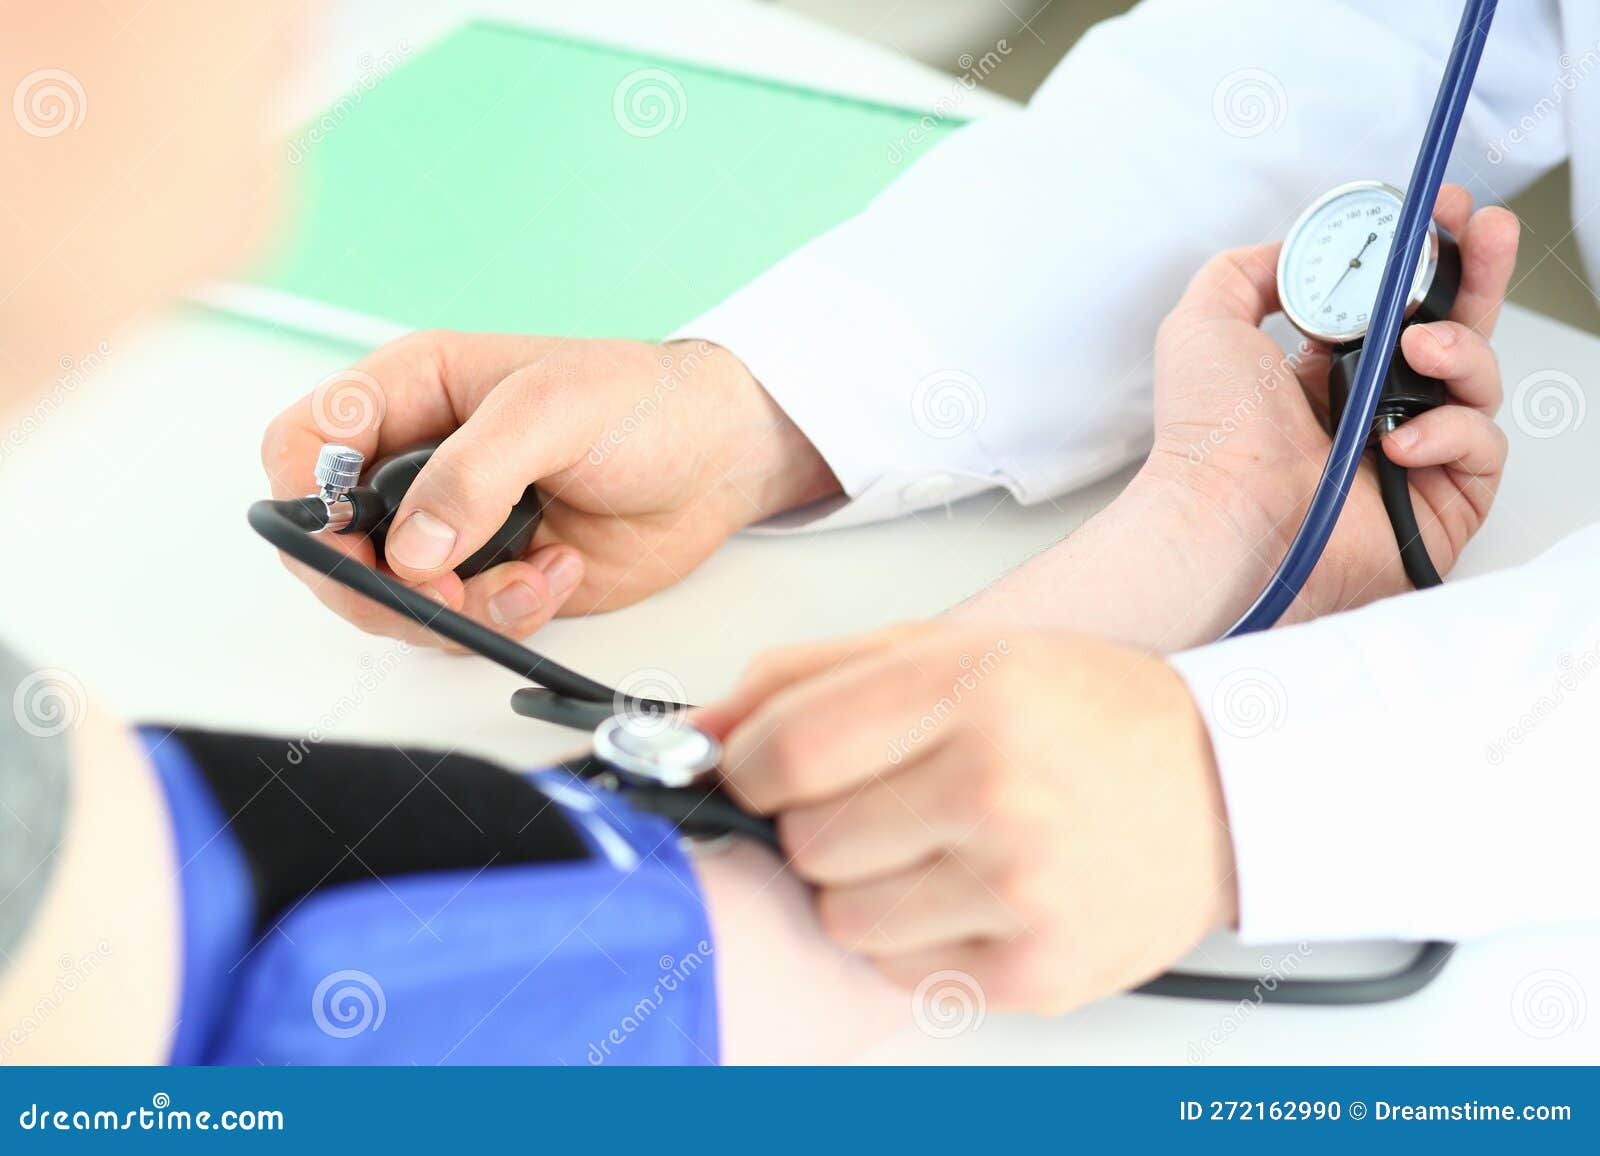 Ambulatory blood pressure monitoring hi-res stock photography and